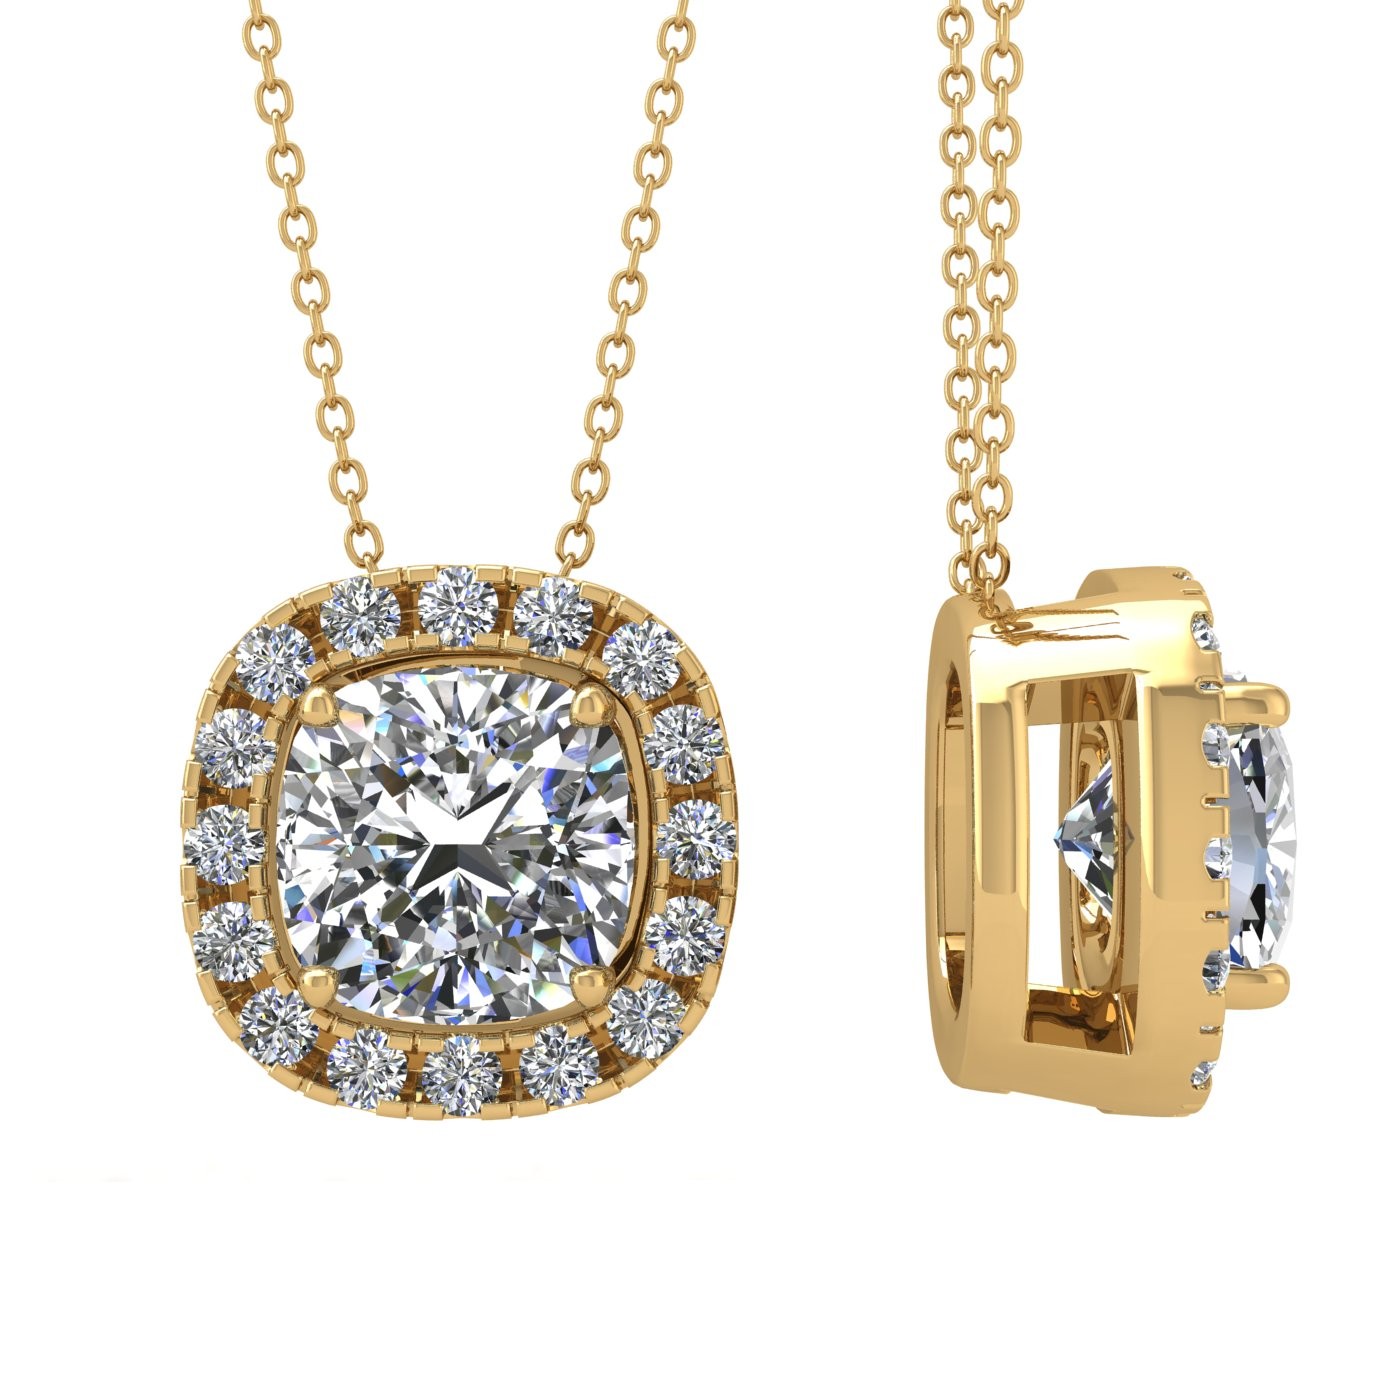 18k yellow gold 0,5 ct 4 prongs cushion shape diamond pendant with diamond pavÉ set halo Photos & images